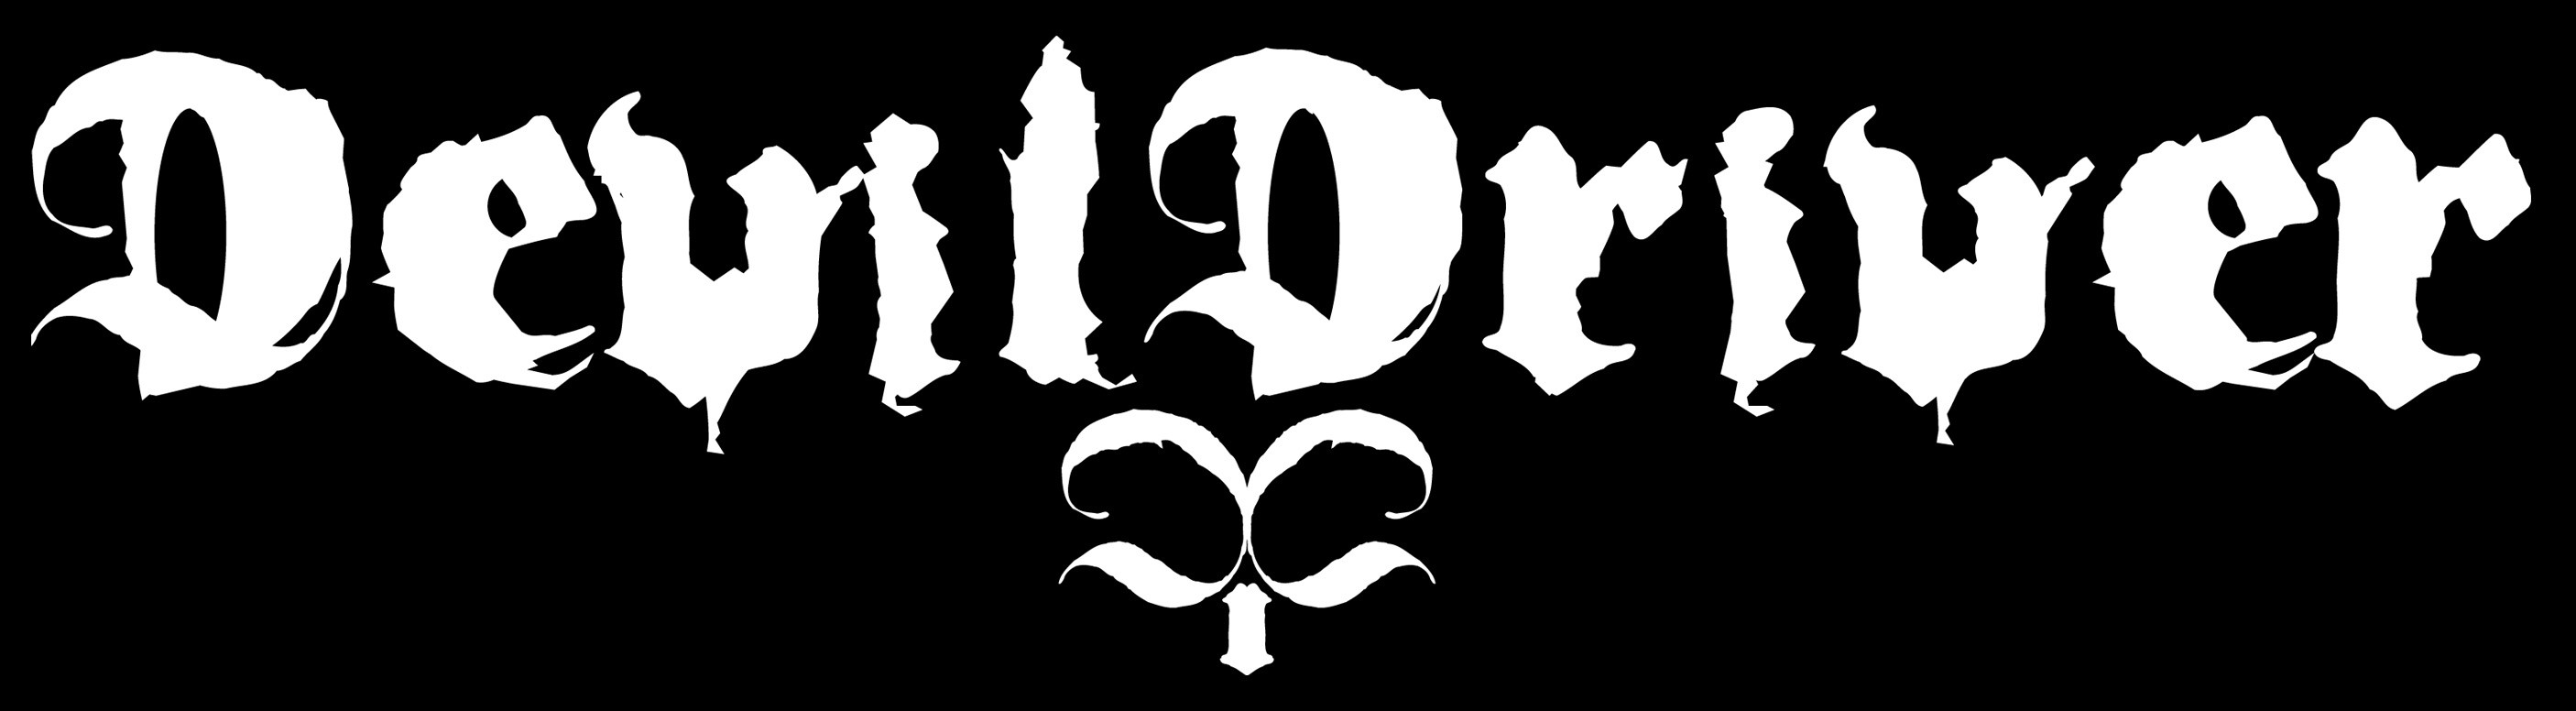 DevilDriver logo